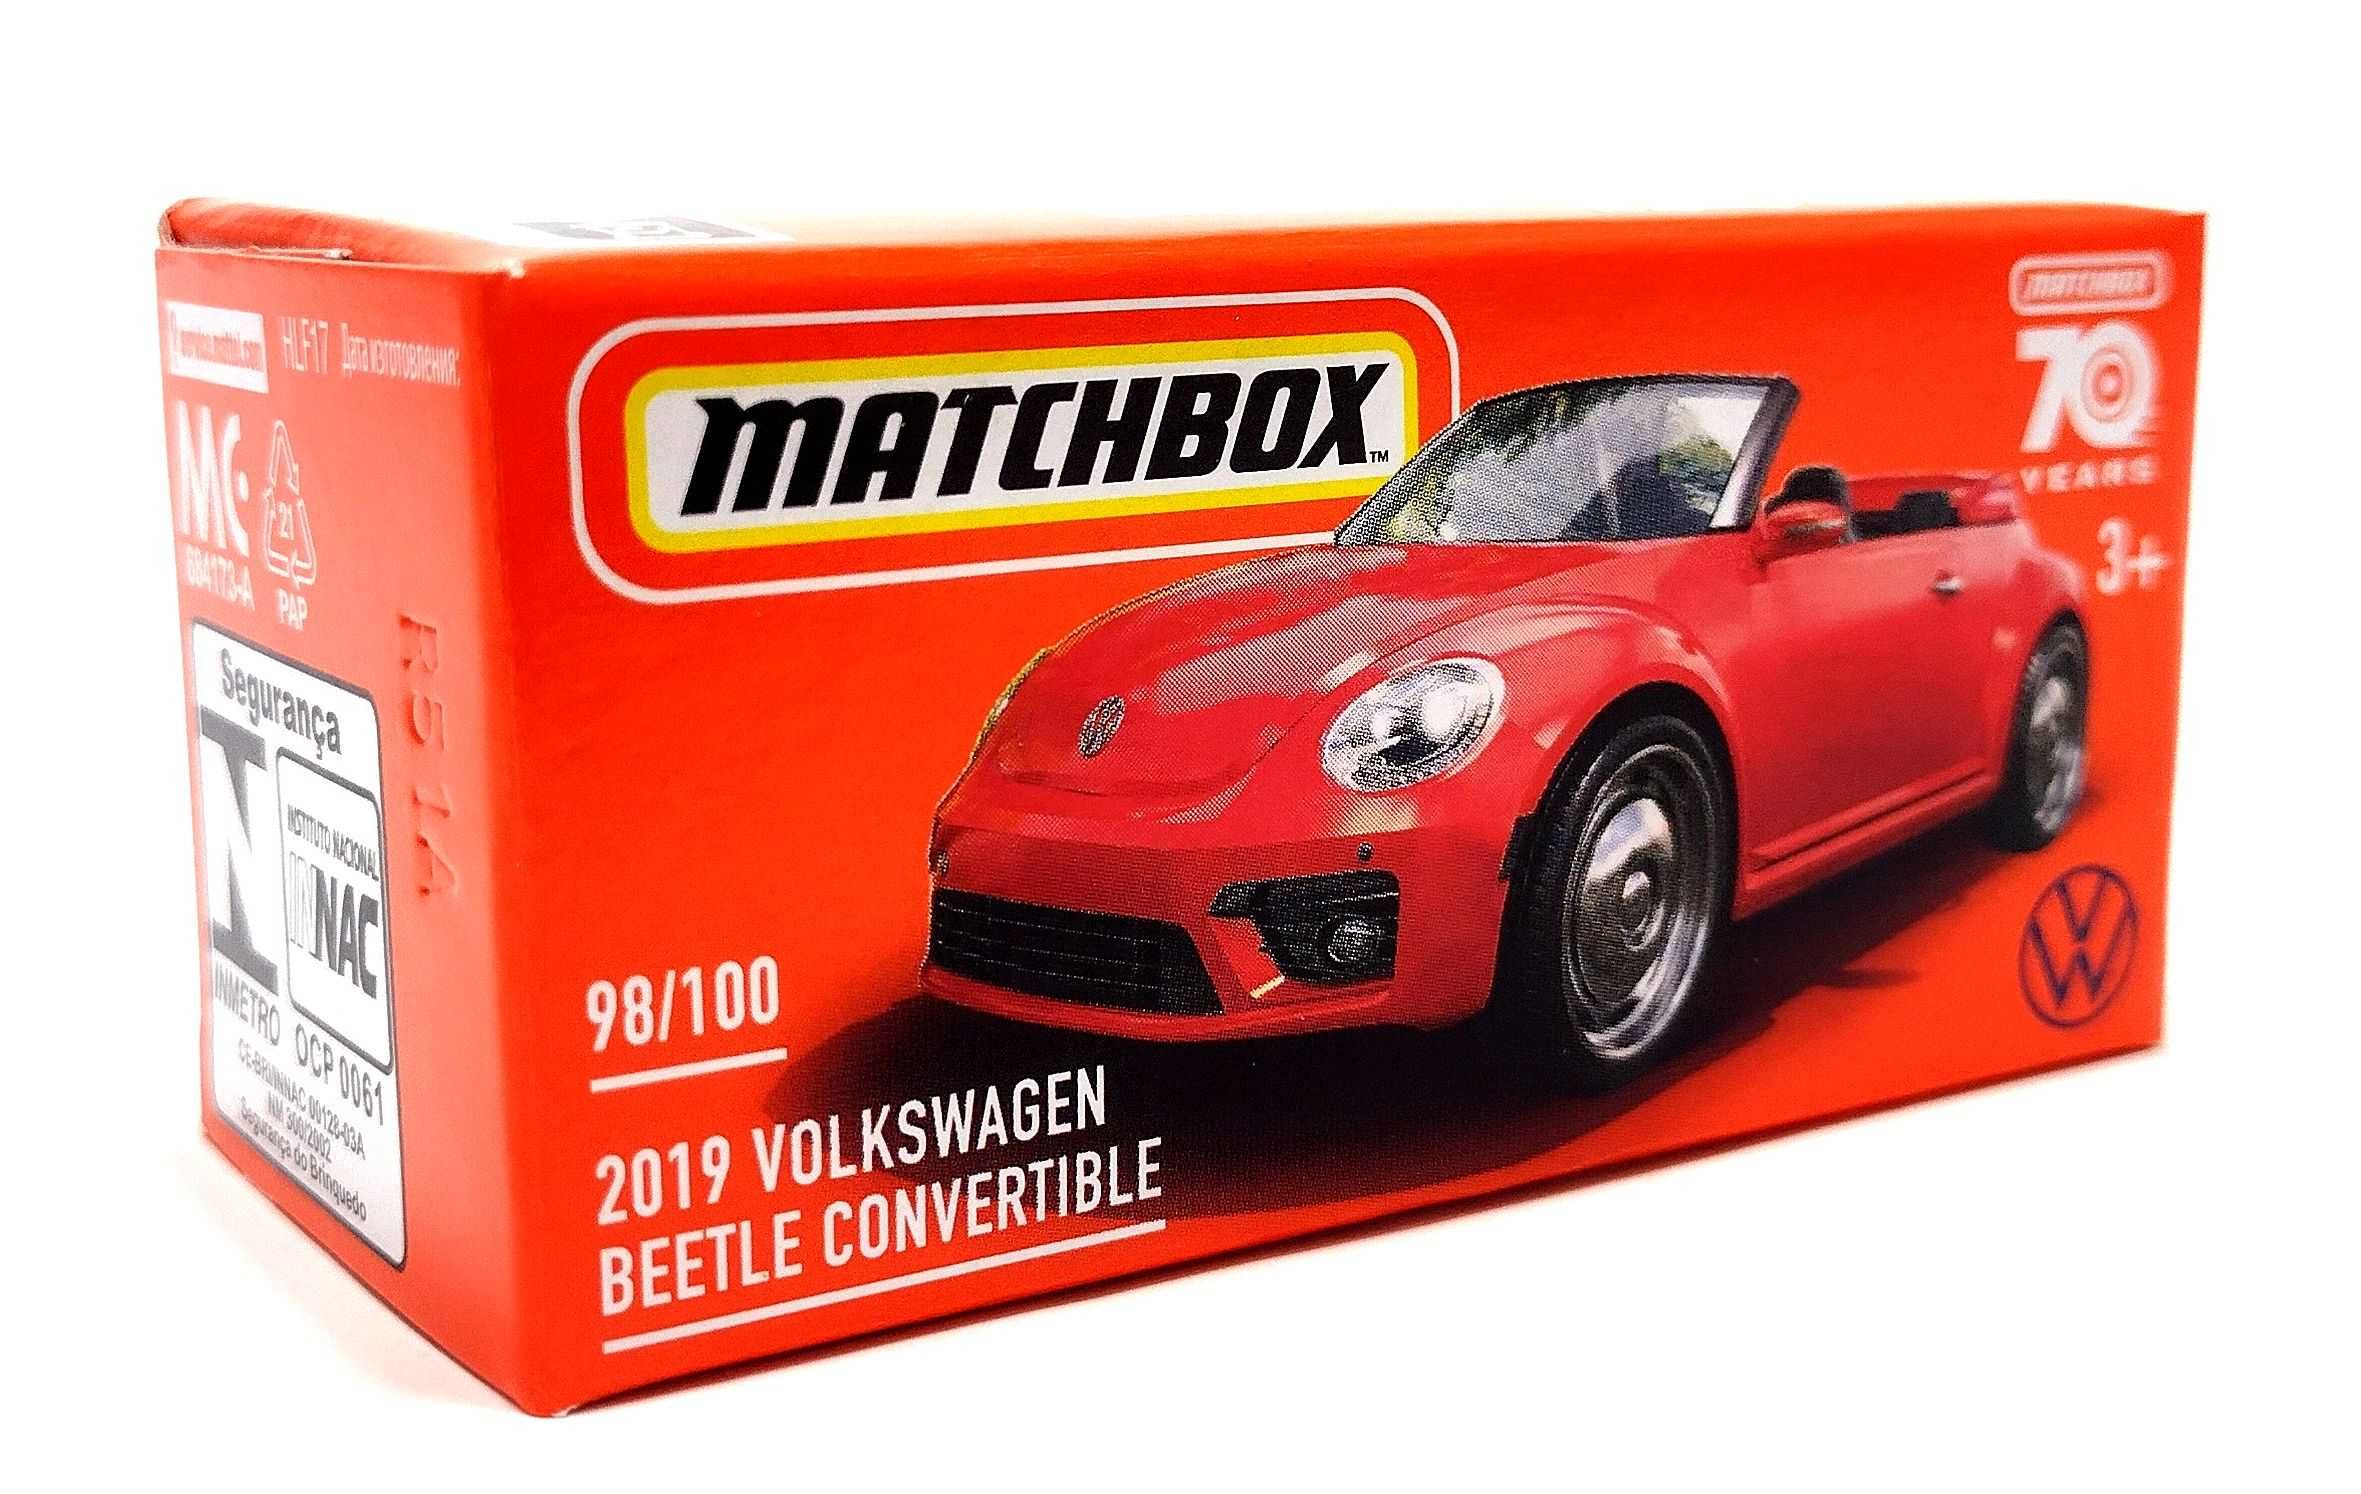 Matchbox - 2019 VW Beetle Convertible. 98/100